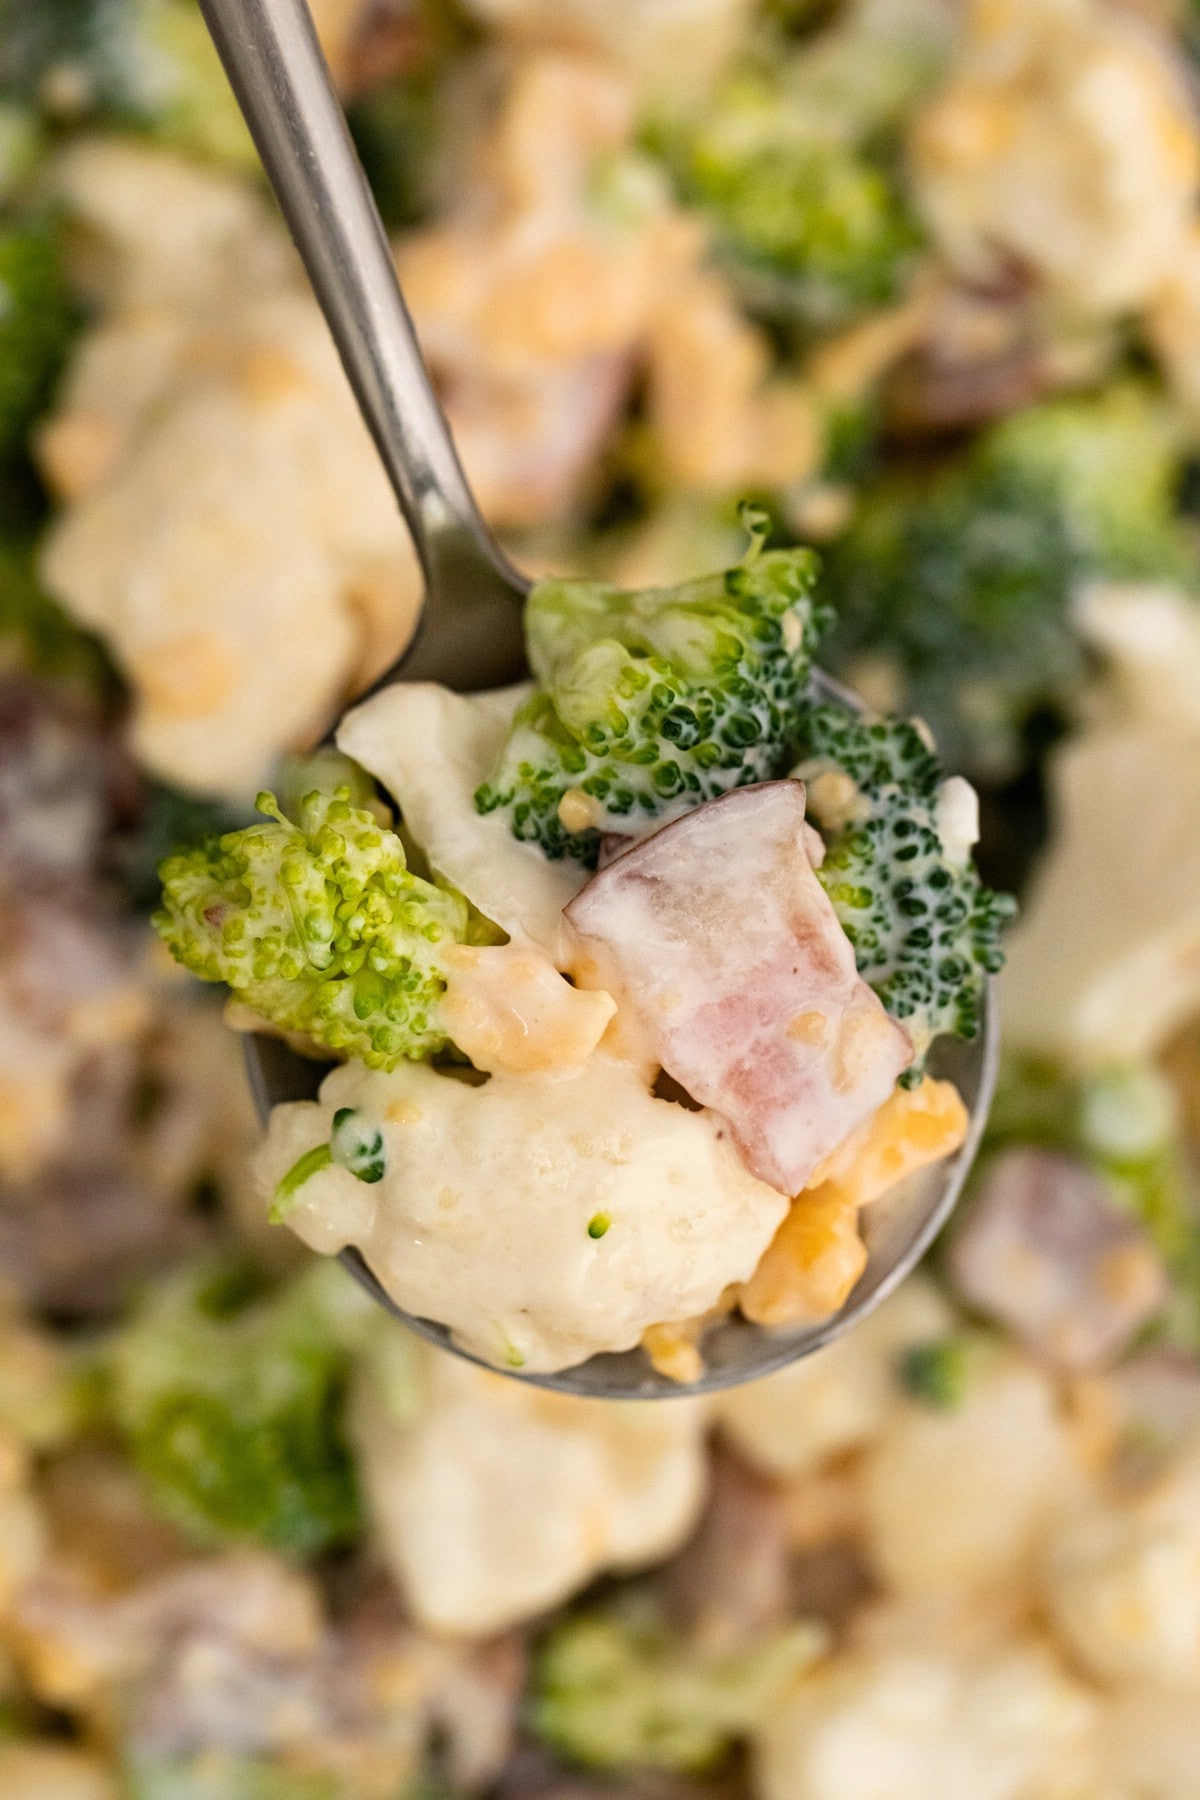 Spoon of broccoli cauliflower salad